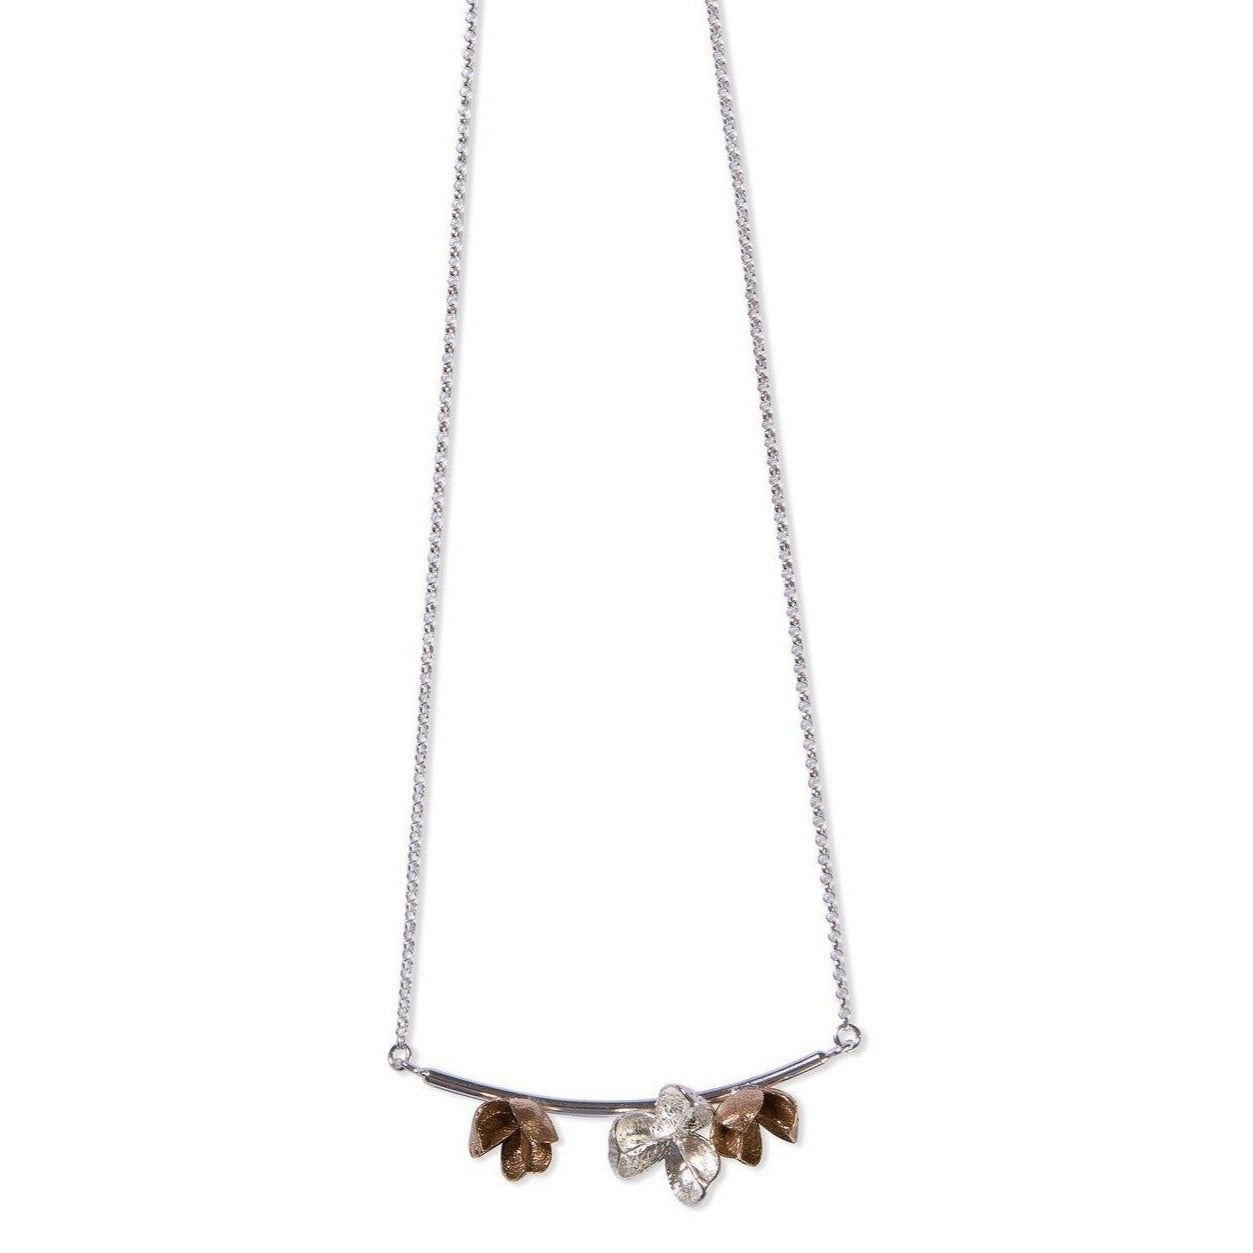 Spikethorn Curved Bar Necklace